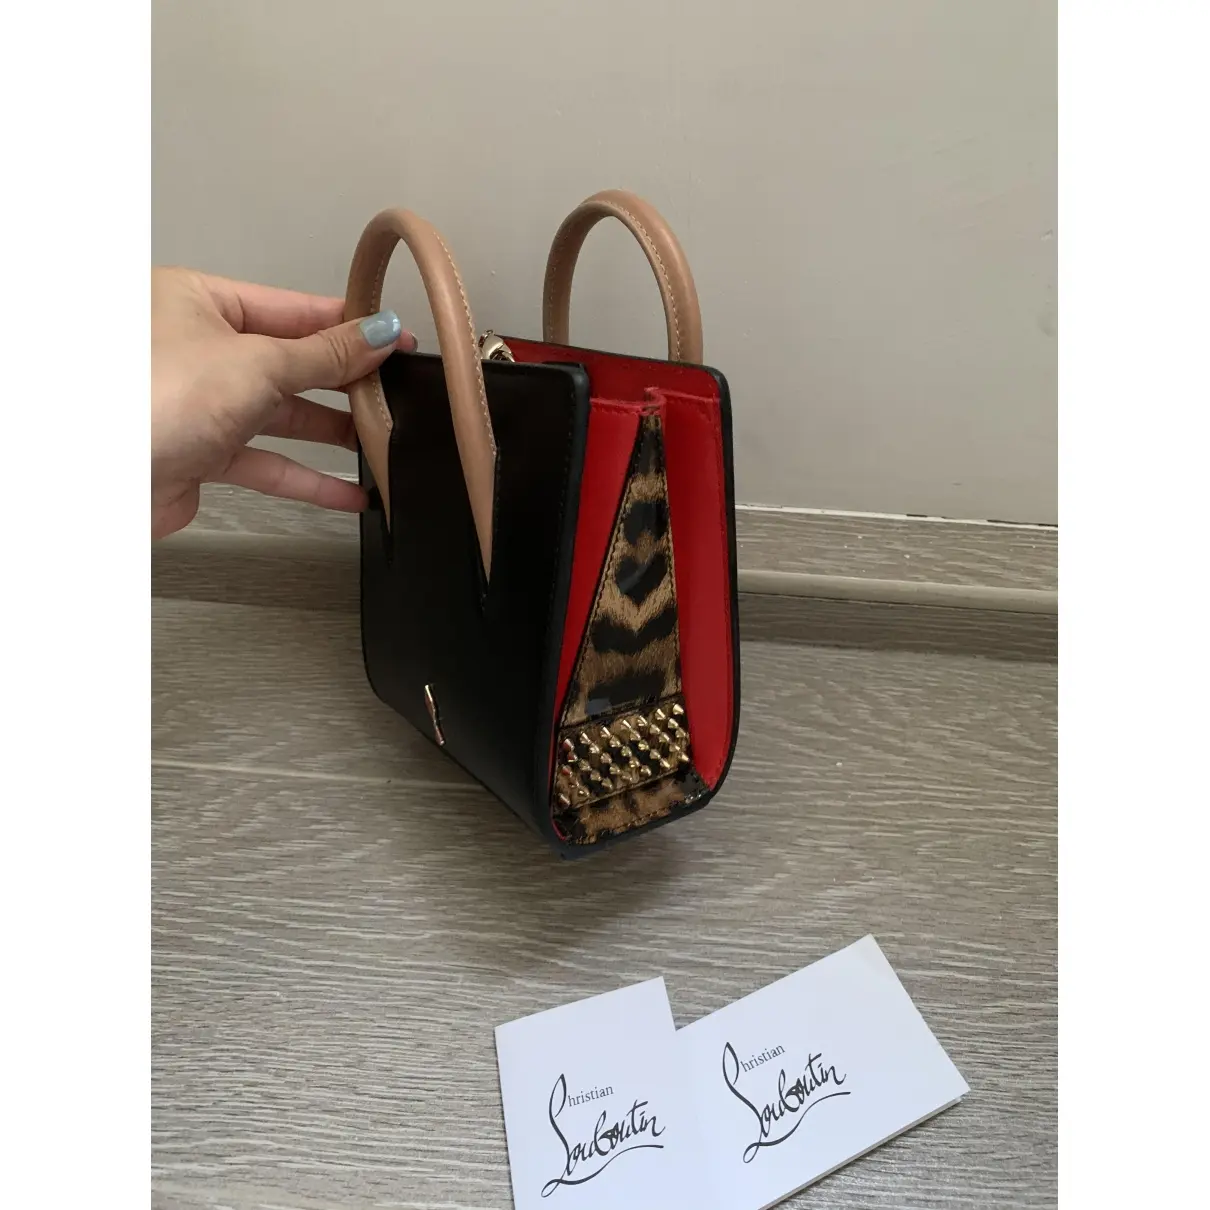 Paloma leather handbag Christian Louboutin